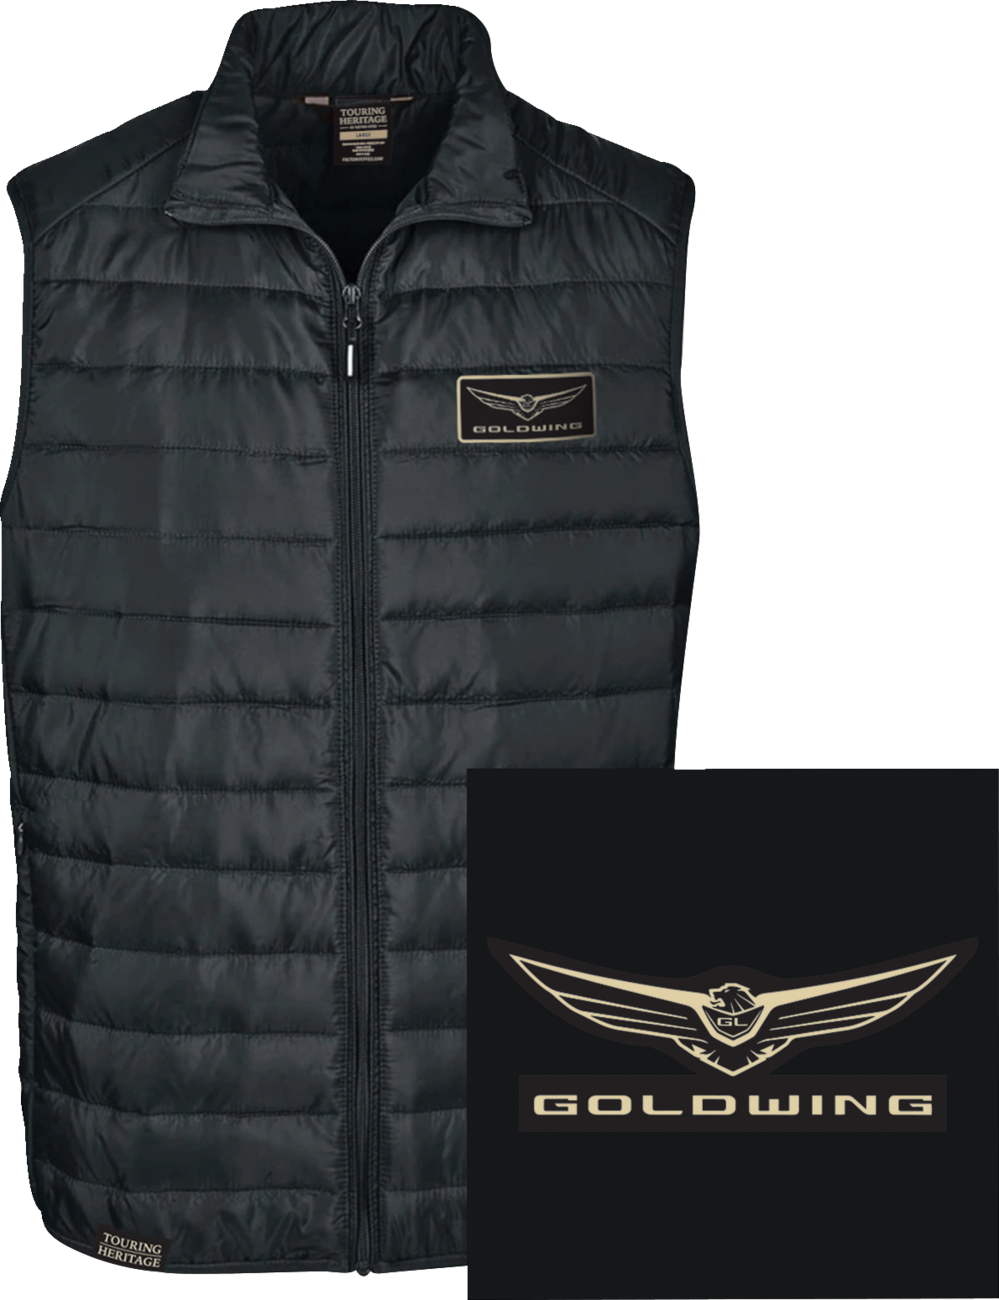 FACTORY EFFEX Goldwing Puff Vest - Black - Medium 25-85802